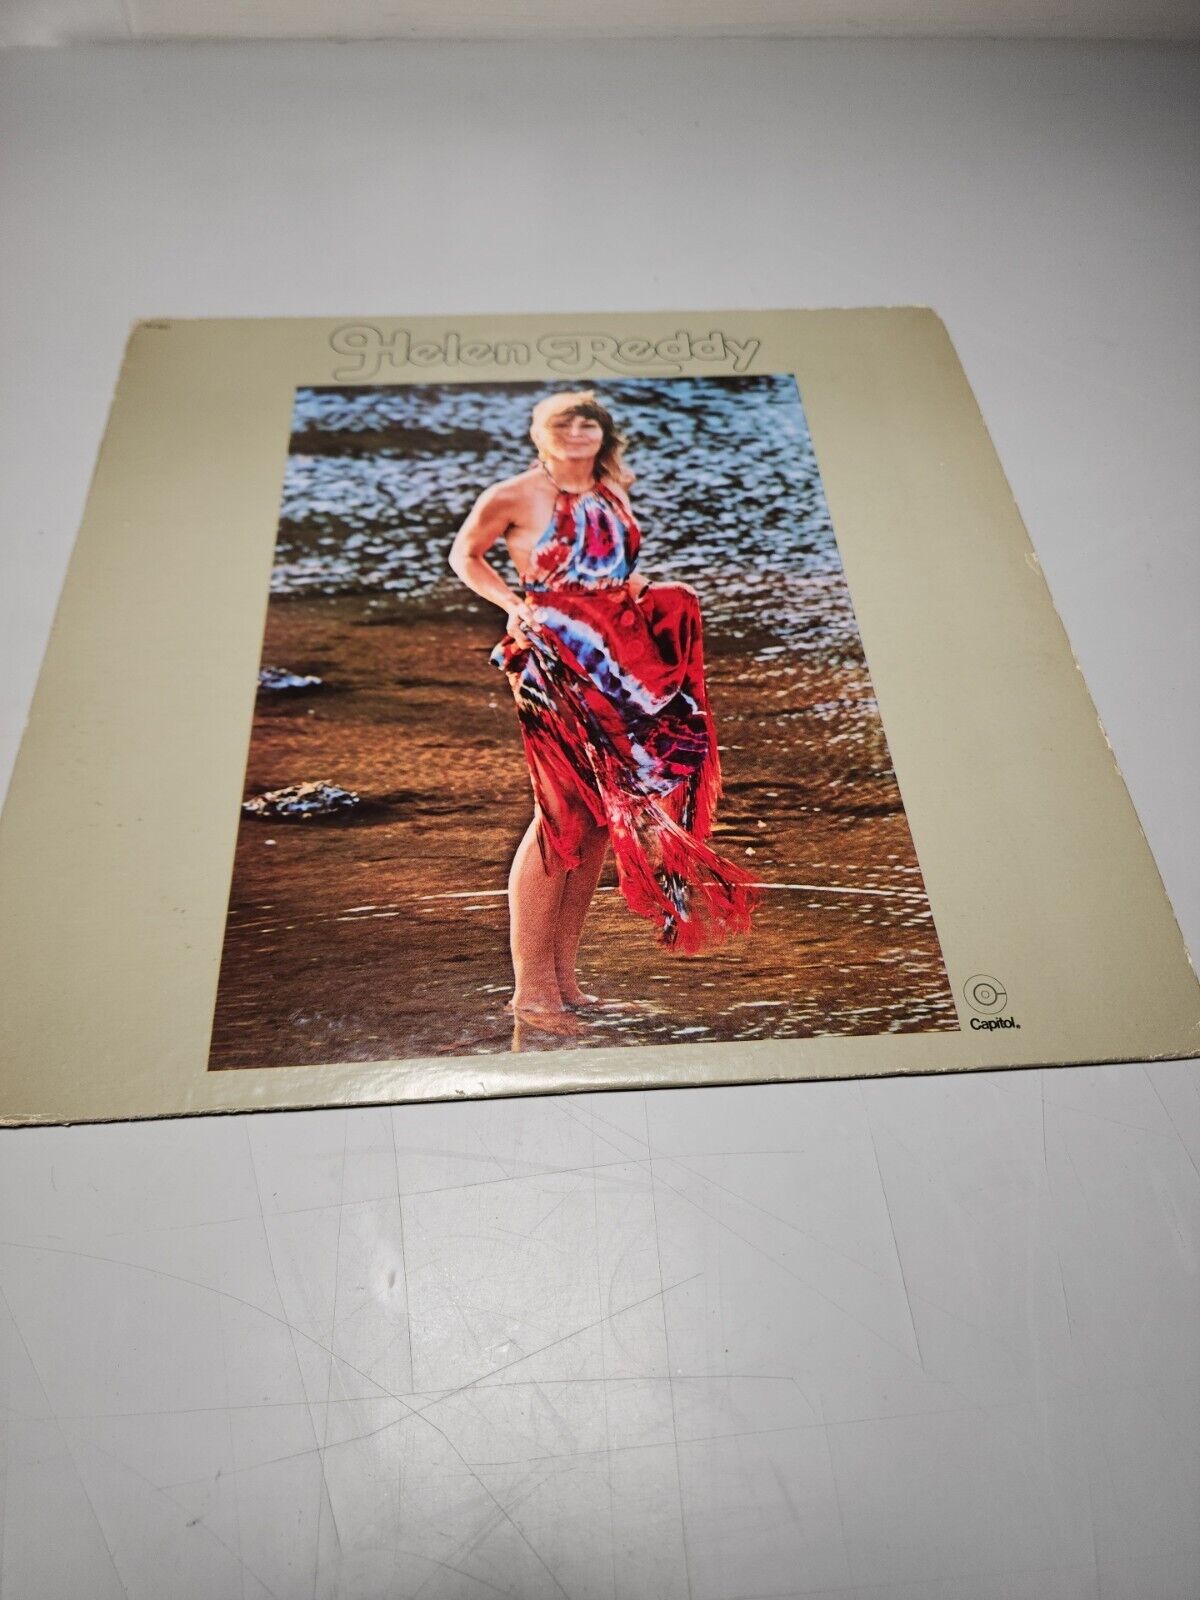 Helen Reddy Helen Reddy 33 RPM LP Record Capitol Records 1971 ST-857